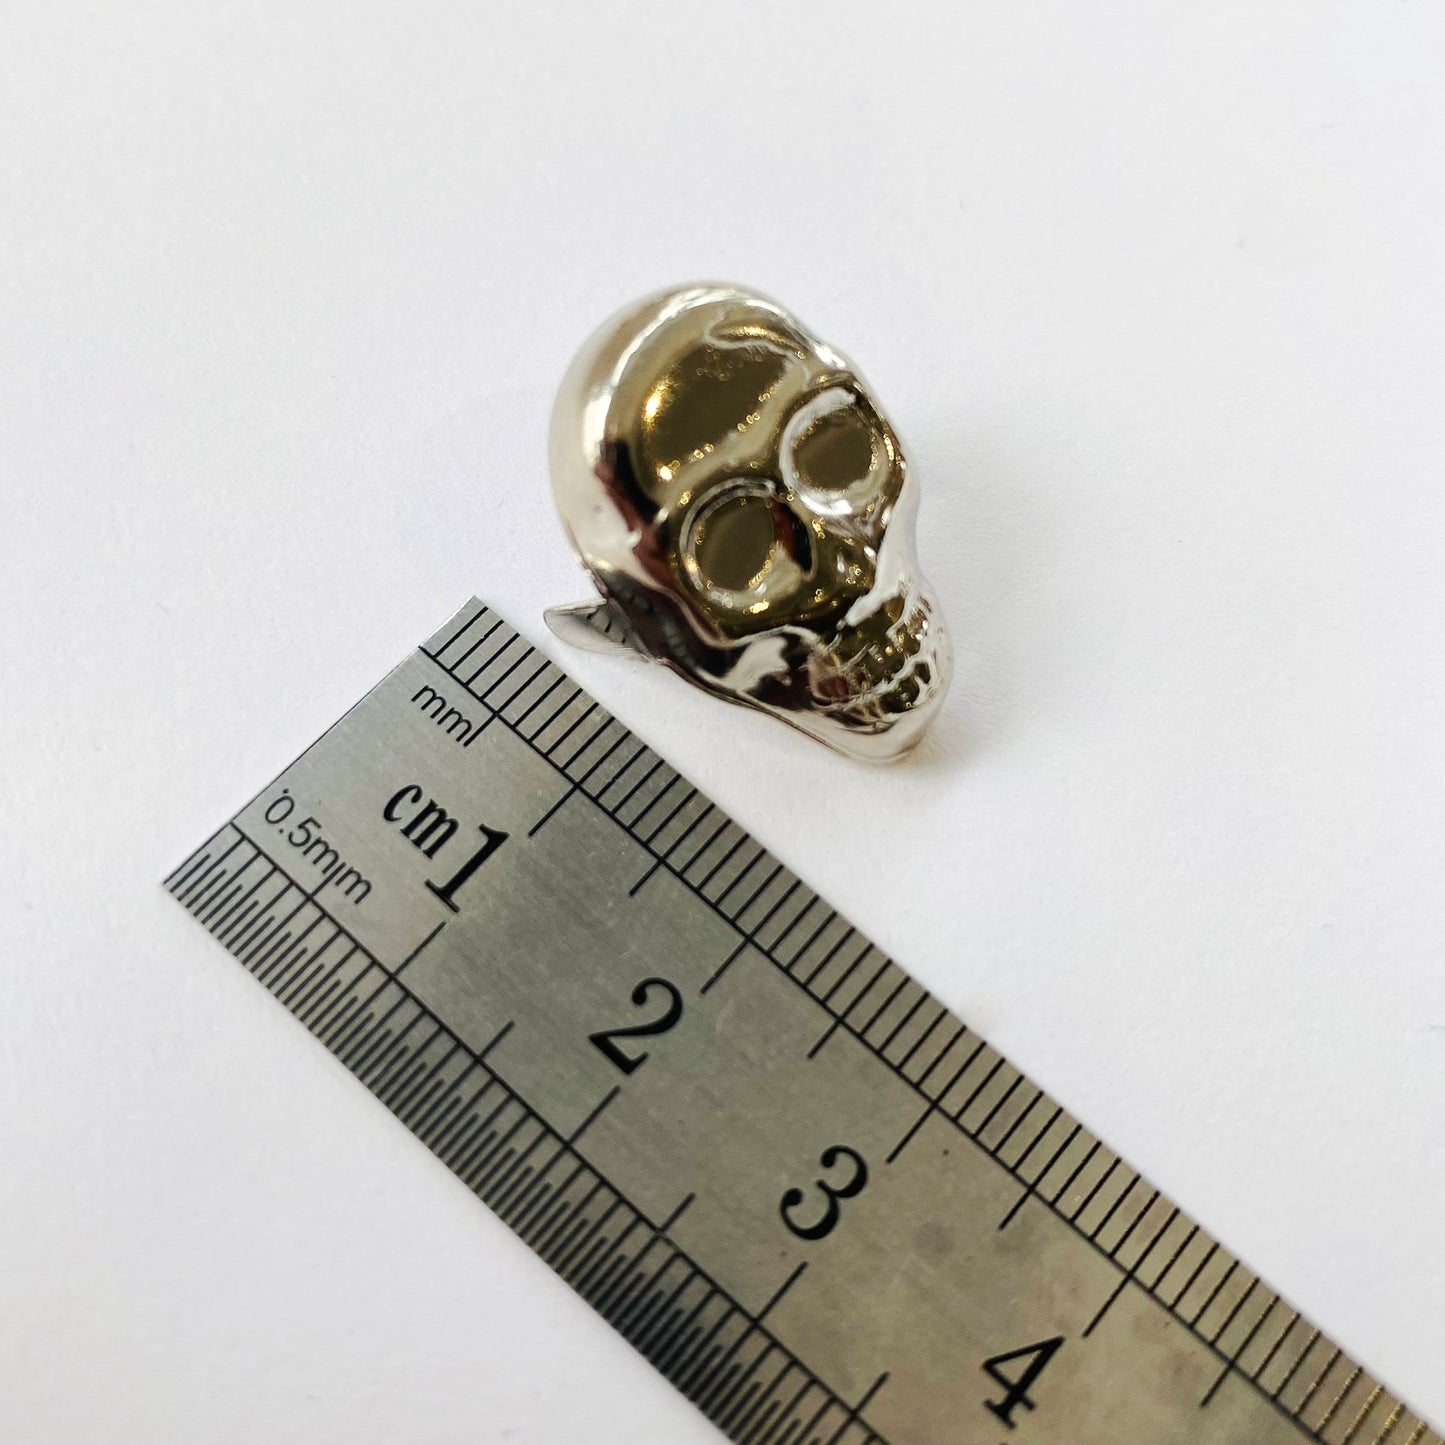 Metal skull studs - set of 10